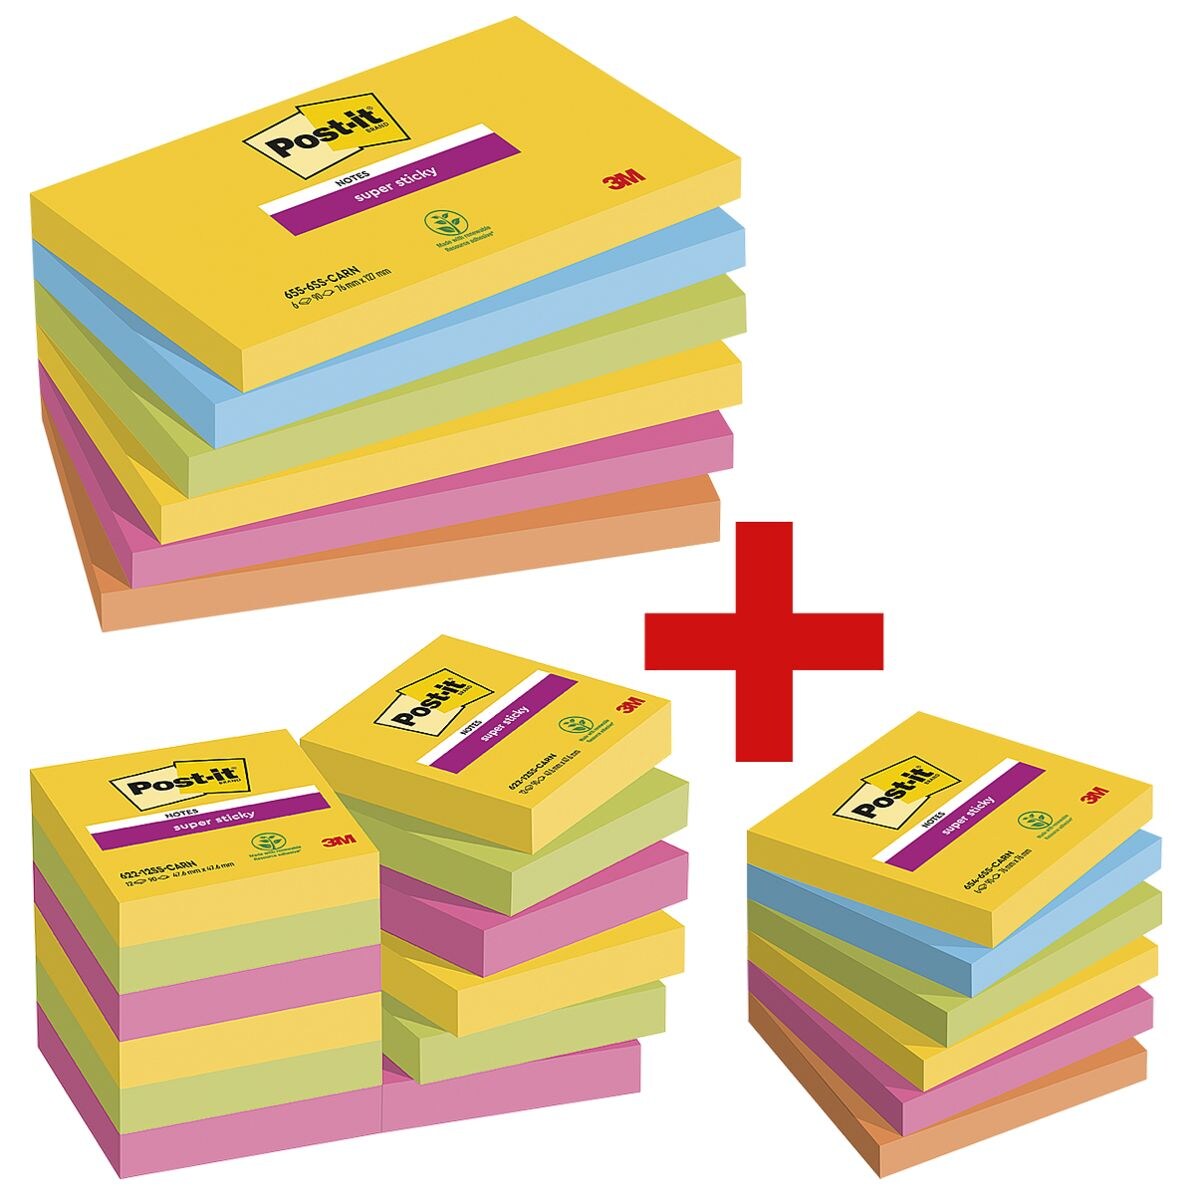 Post-it Super Sticky Haftnotizblock-Set »Carnival Collection« 3 Größen, 24 Stück, 2160 Blatt gesamt, farbig sortiert 6556SR